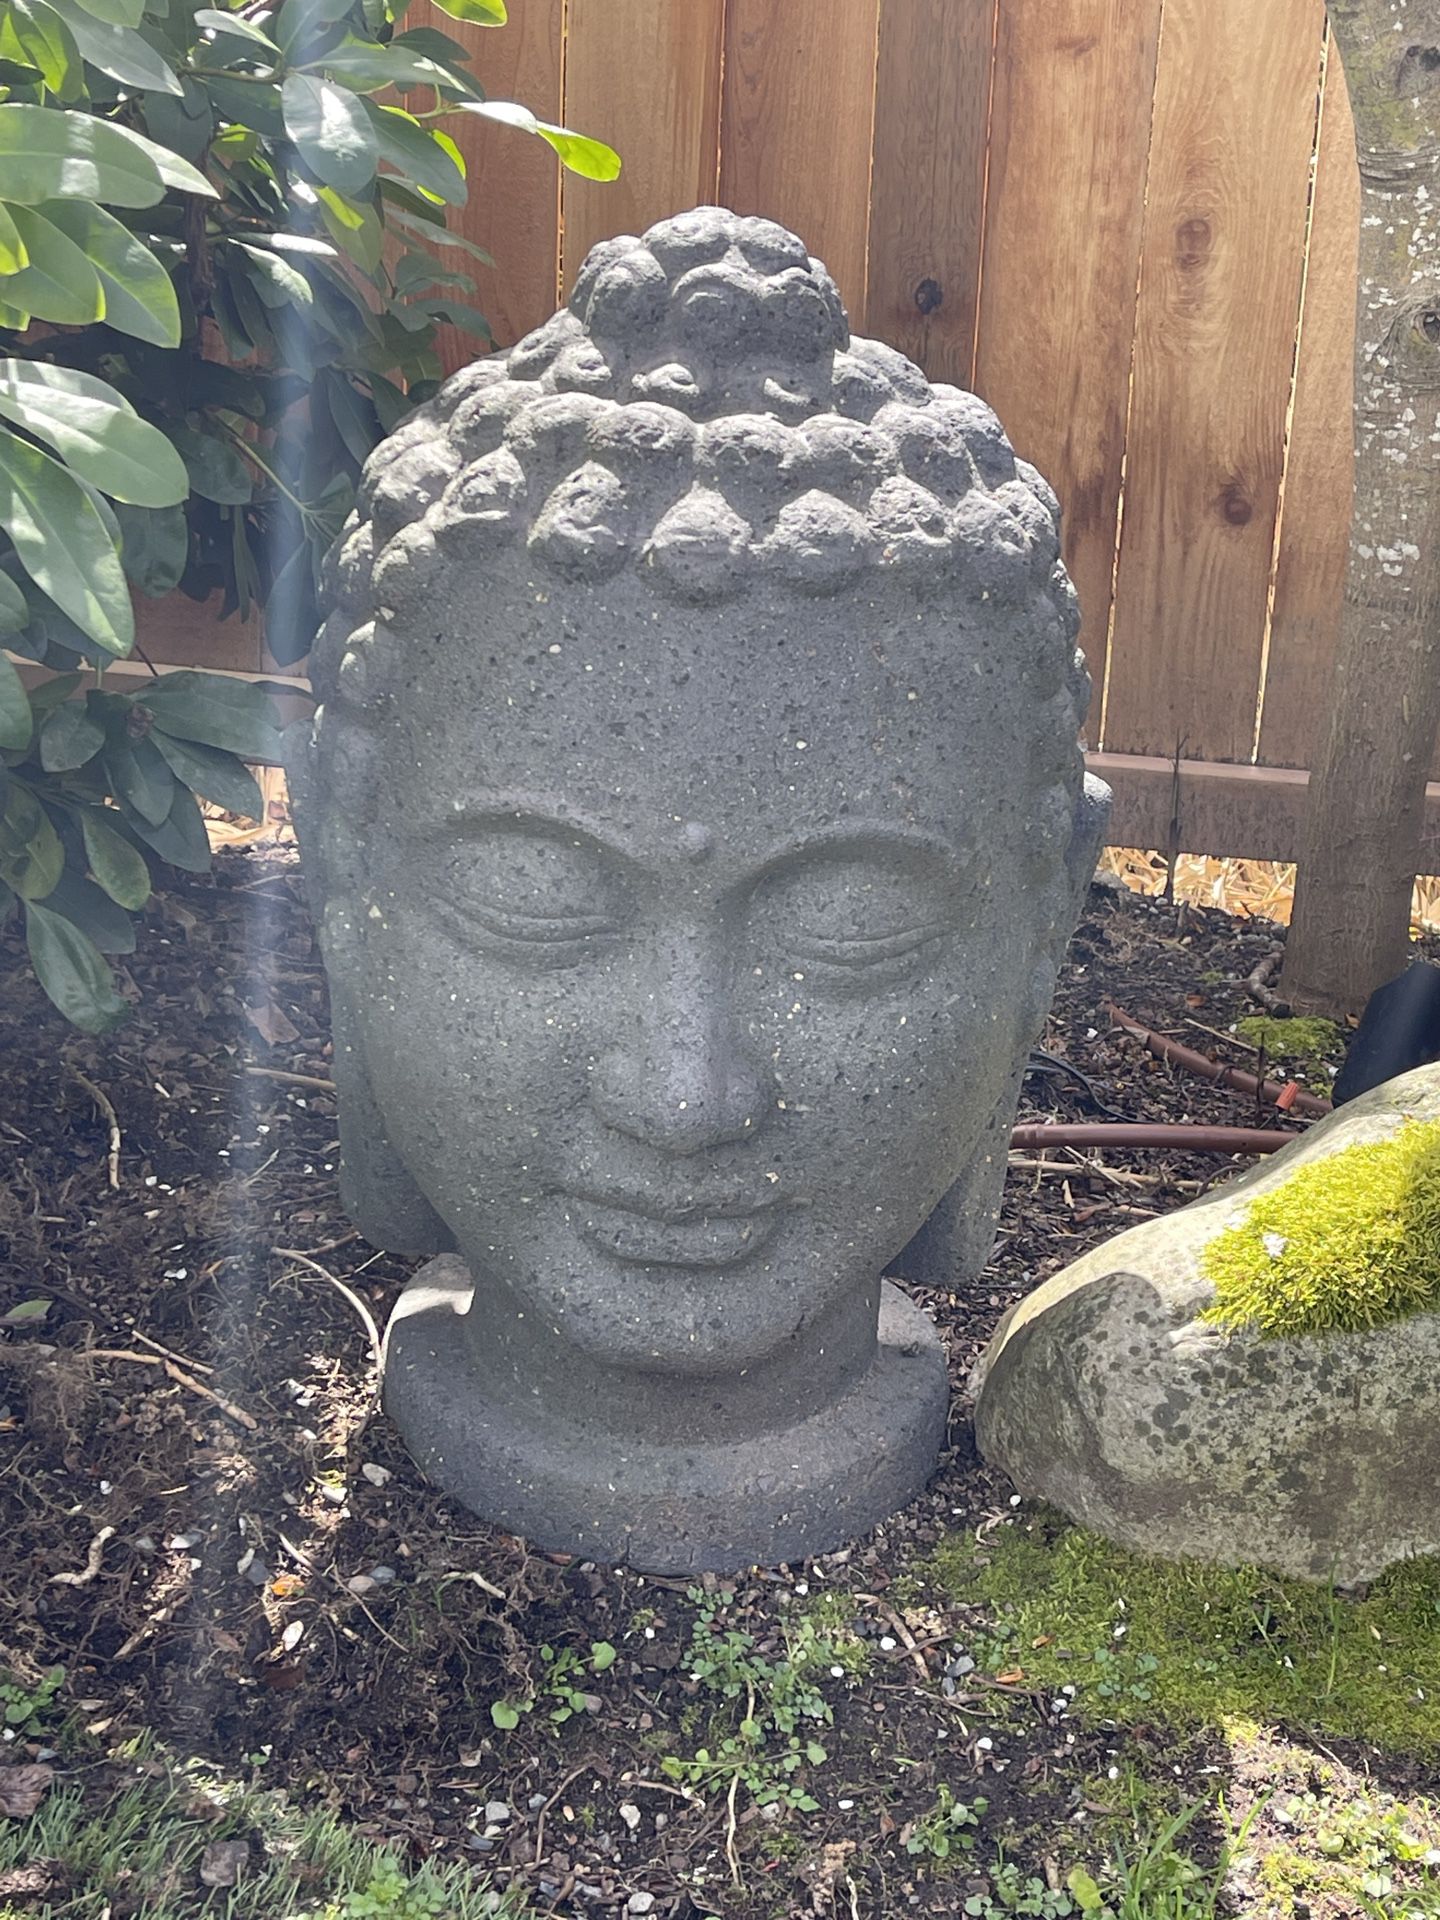 Yard art-extra Large Budda Head Statue 